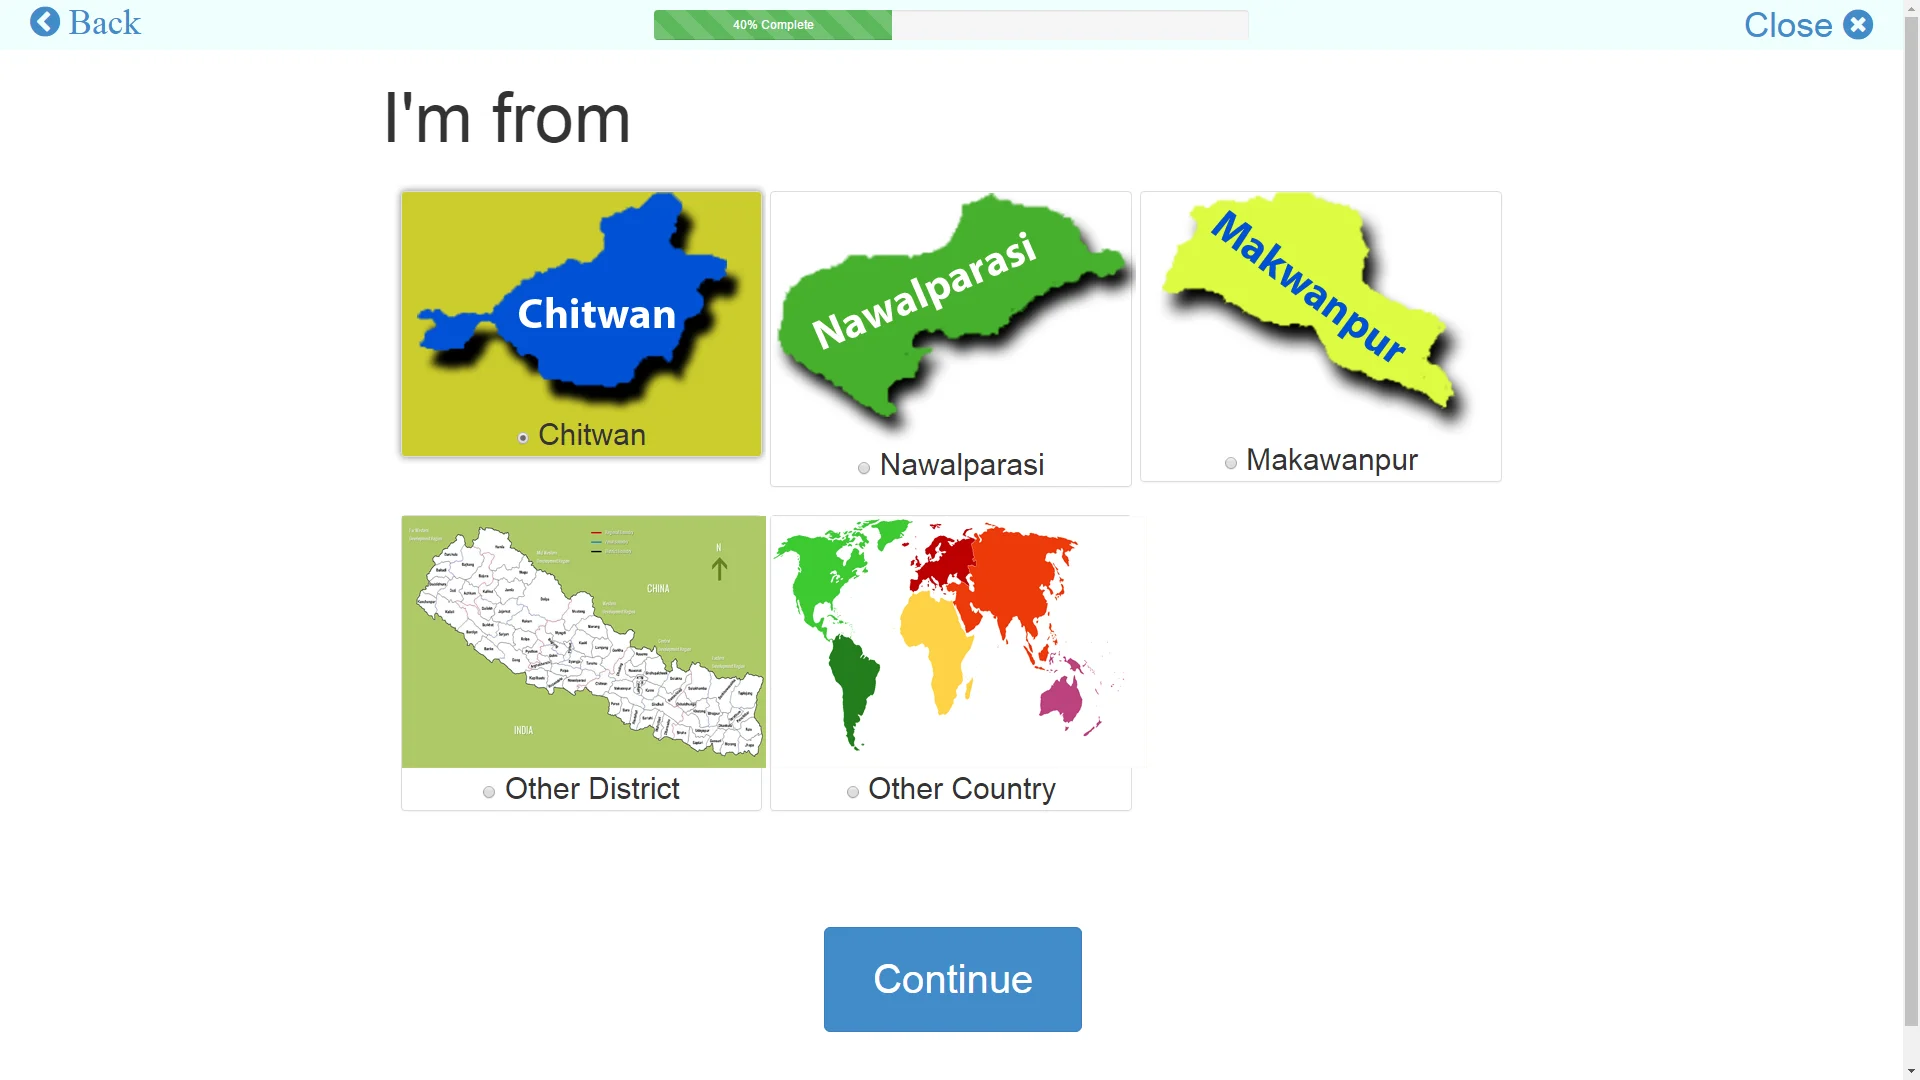 Survey System-Chitwan Mahotsav